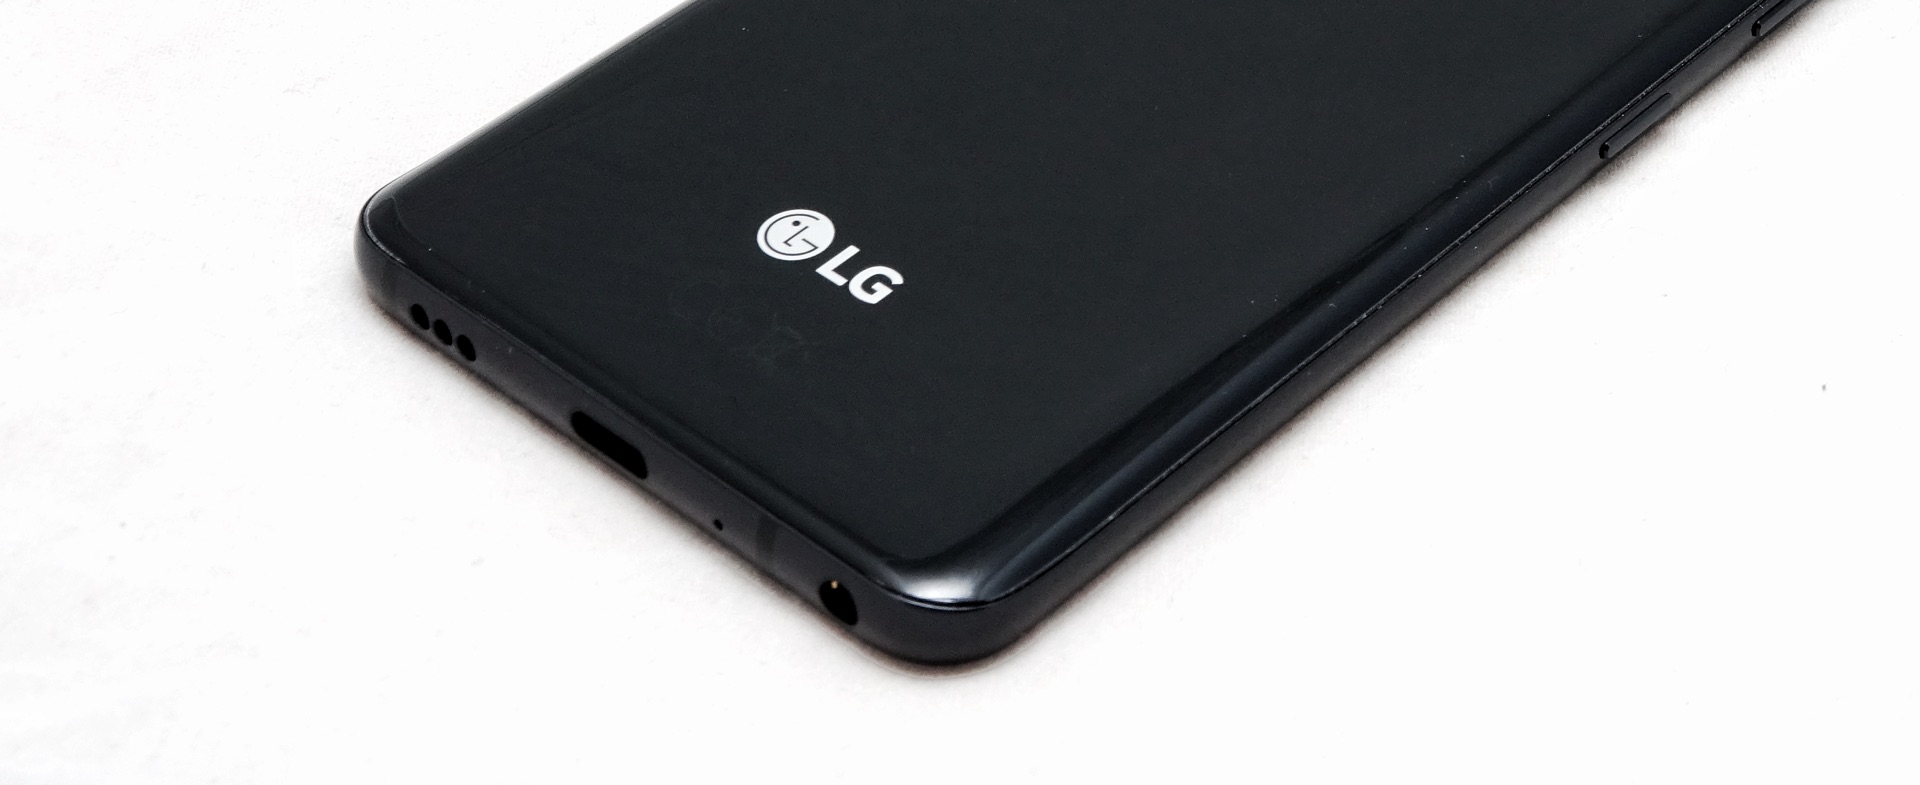 LG G7 rear panel